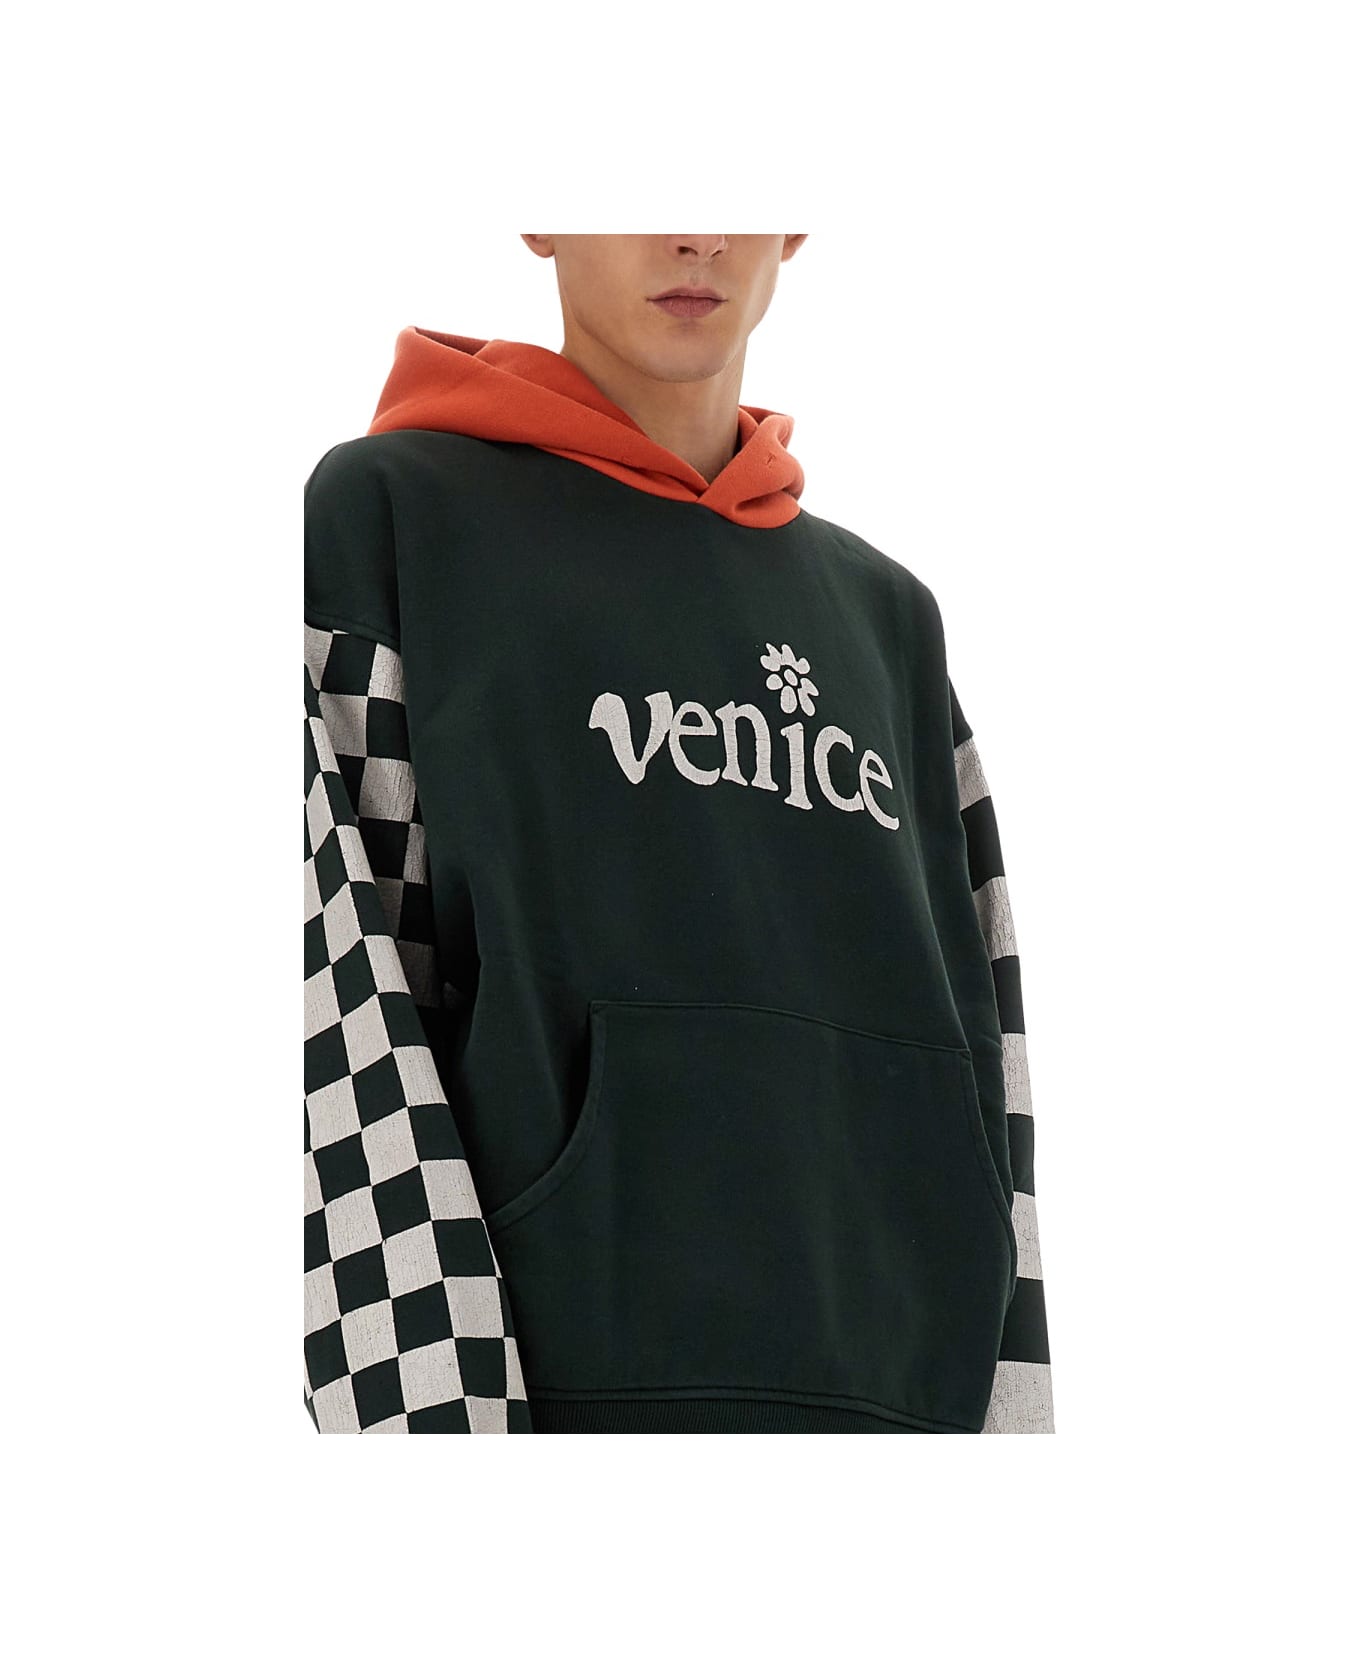 ERL 'venice' Sweatshirt - BLACK